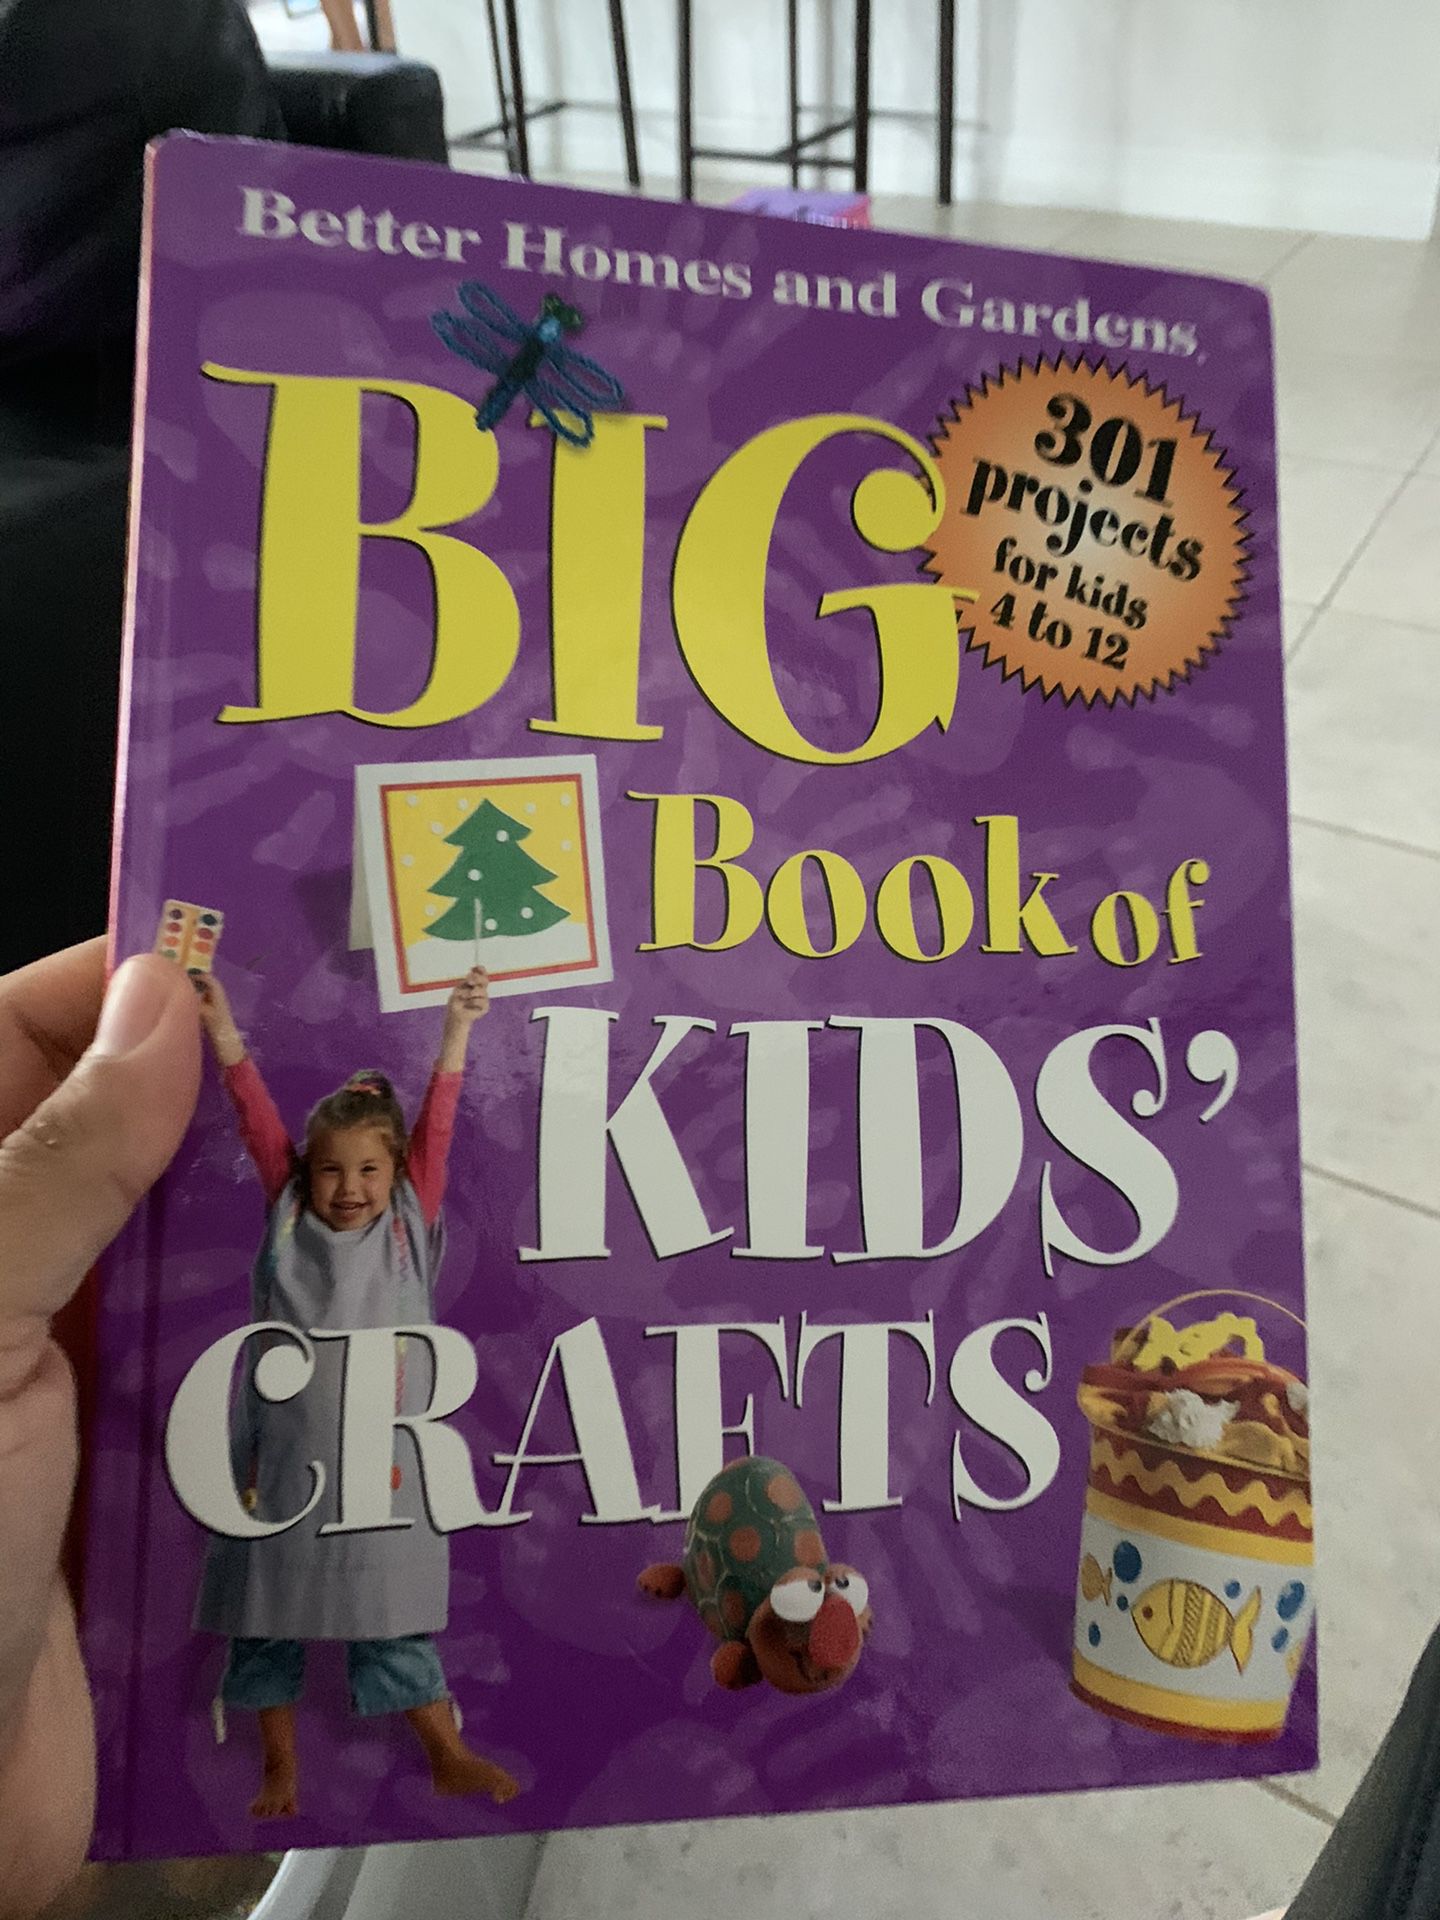 Kids crafts book new